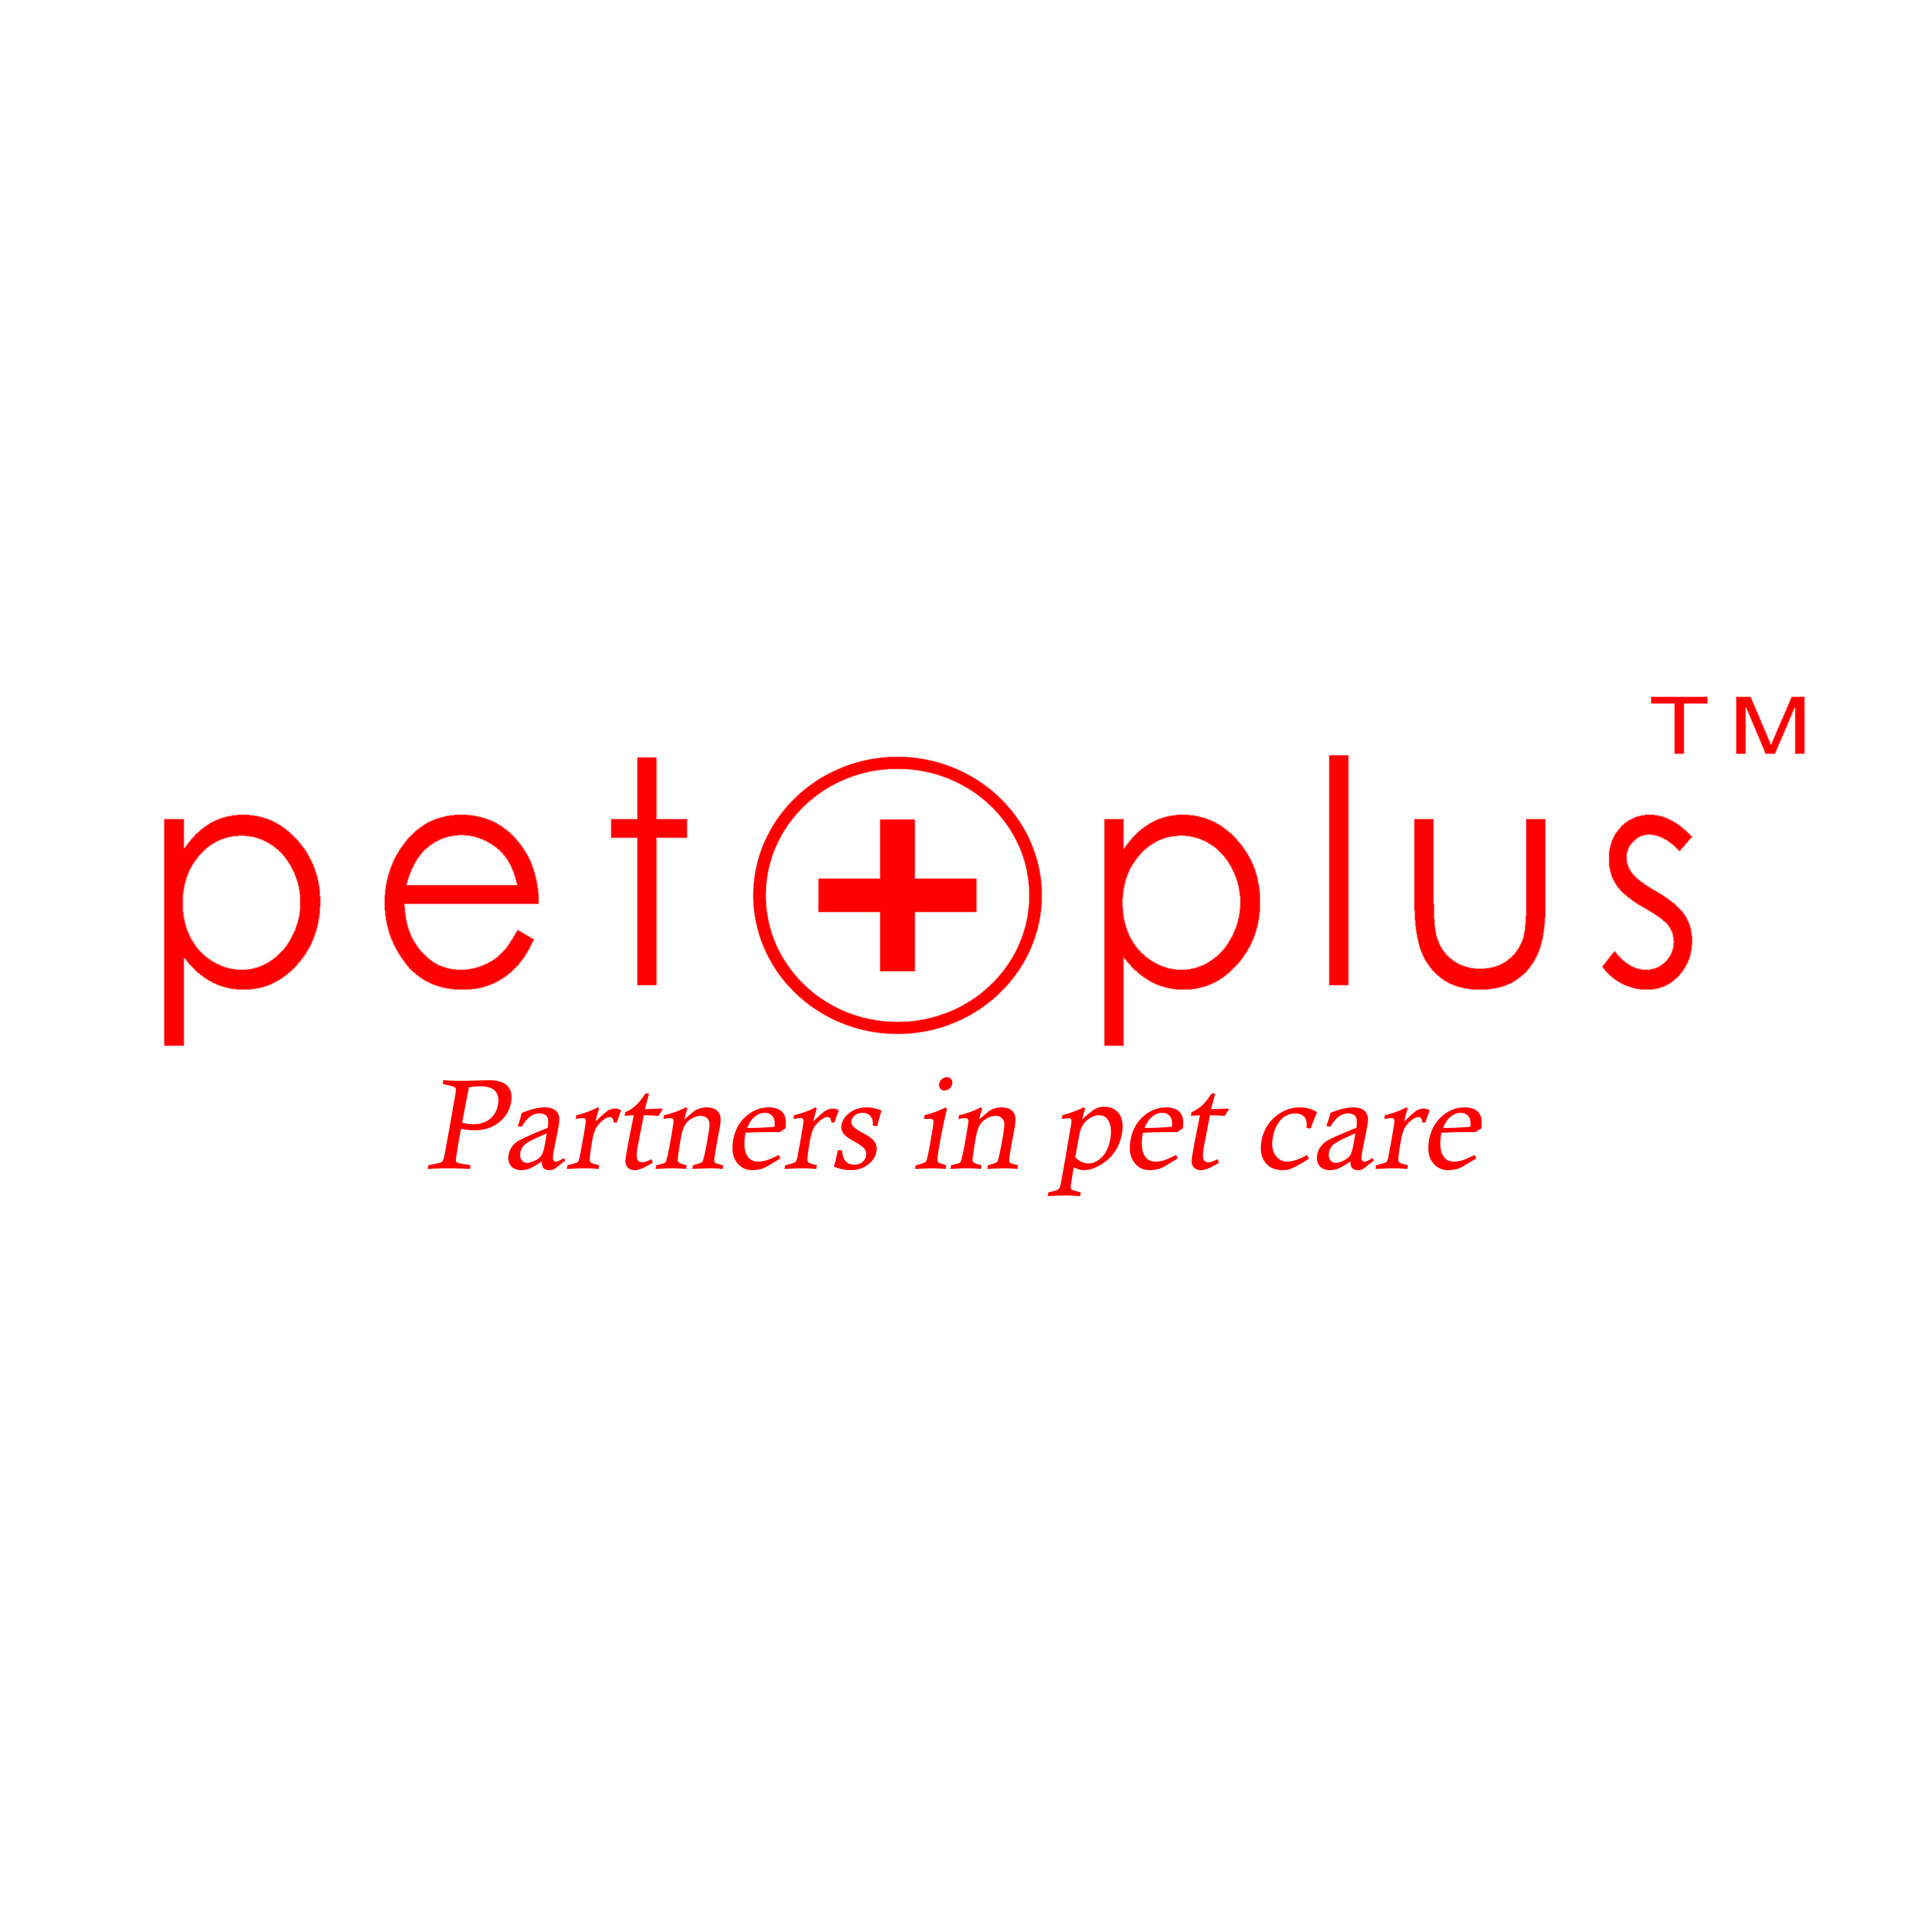 Pet Plus Global Marketing Corporation